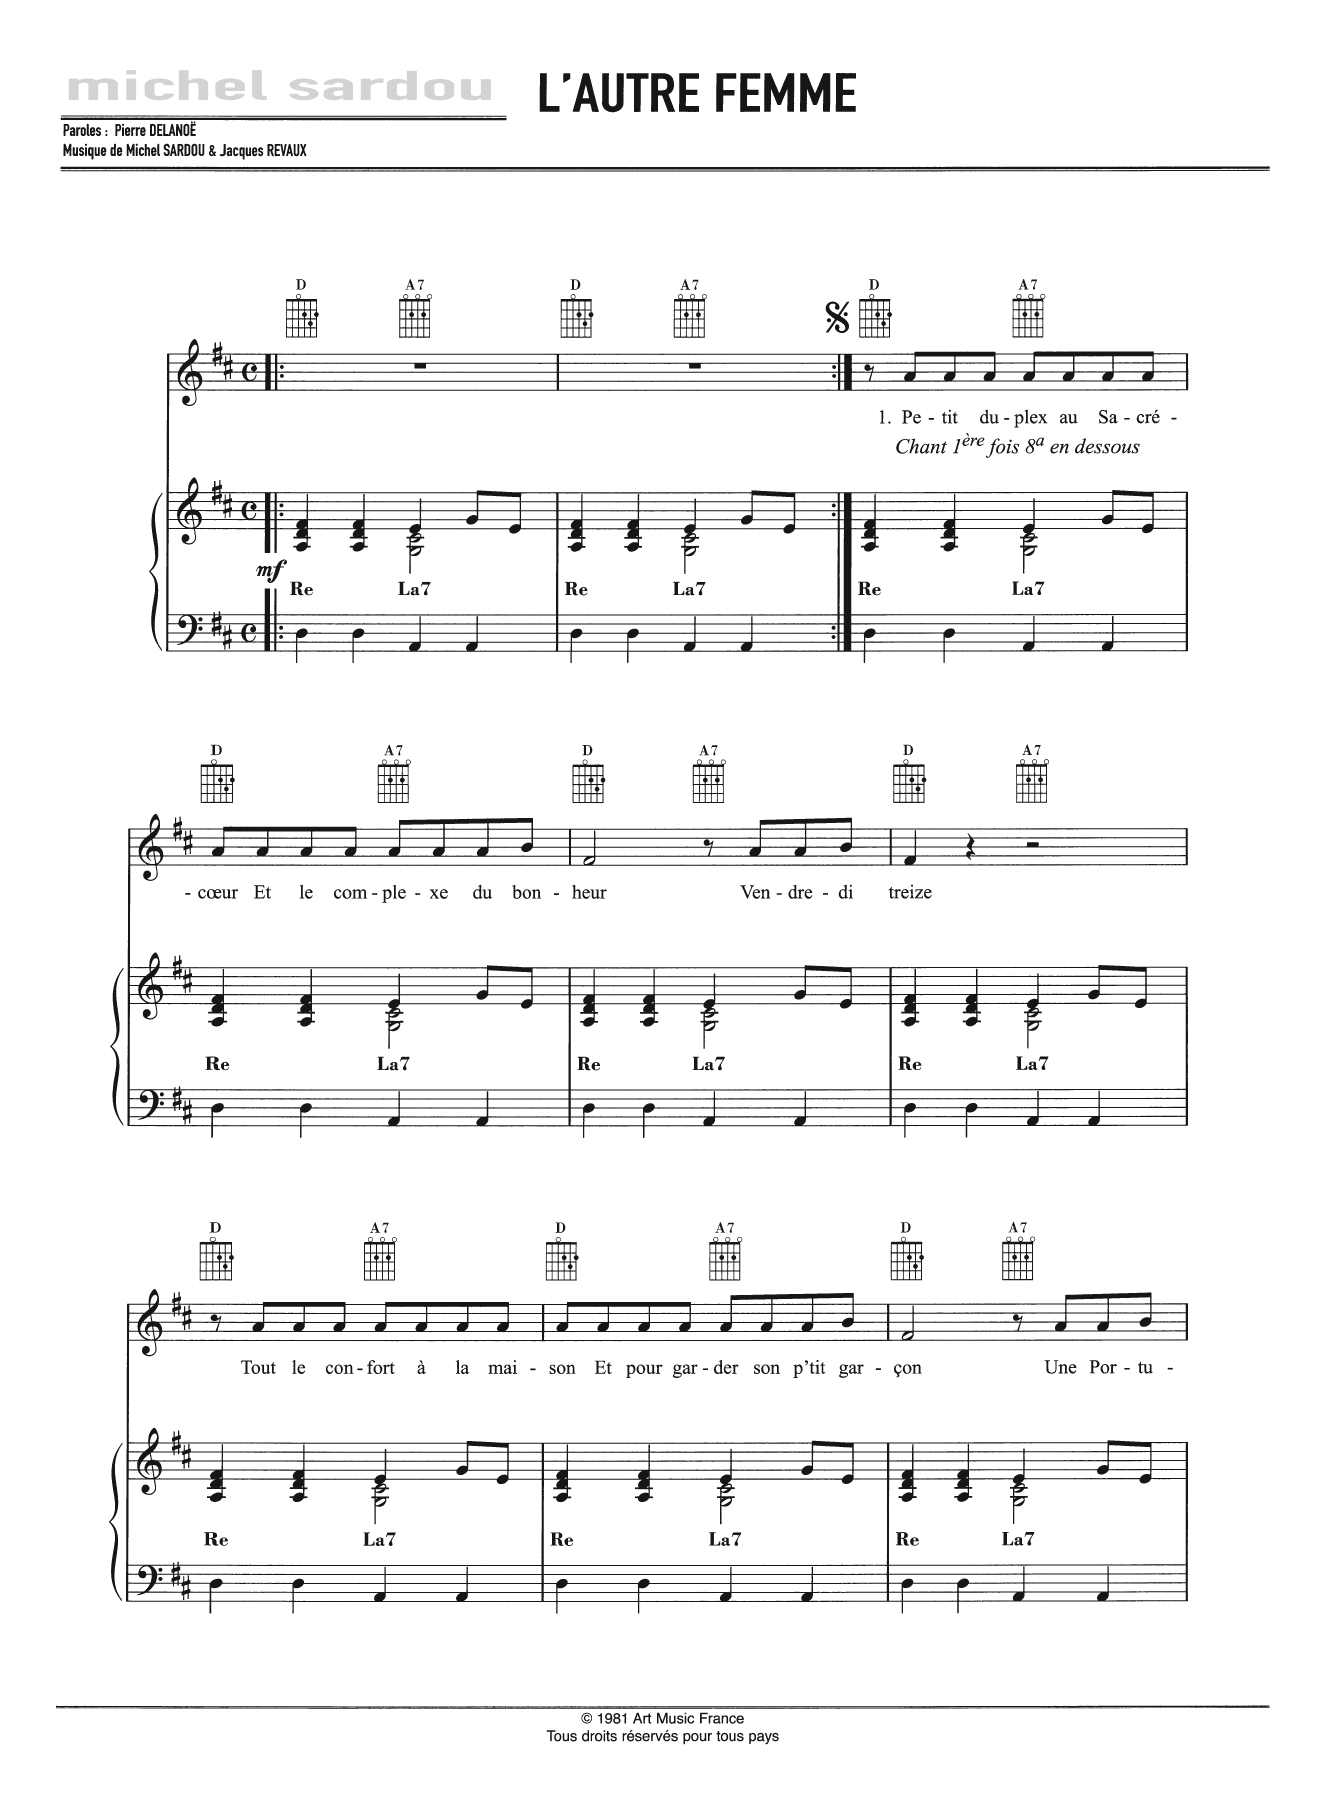 Michel Sardou L'Autre Femme Sheet Music Notes & Chords for Piano, Vocal & Guitar - Download or Print PDF